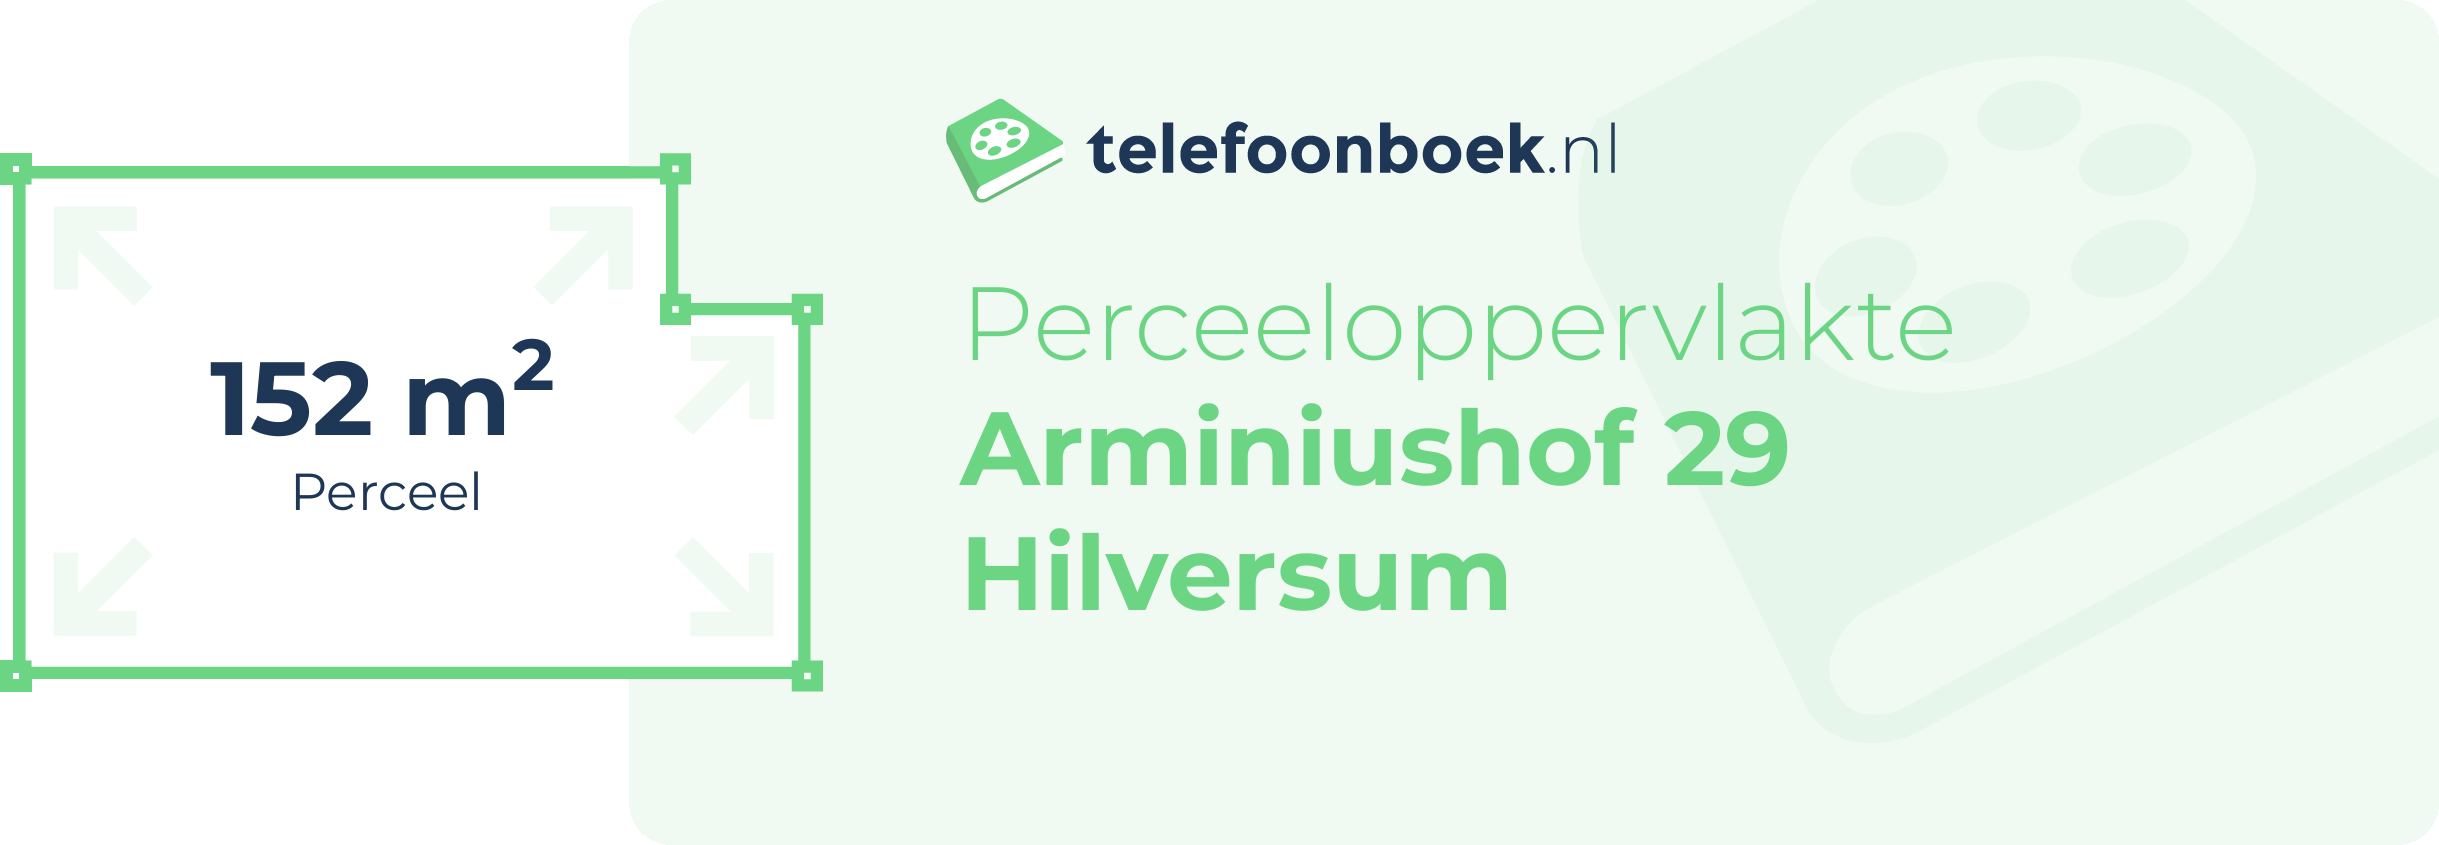 Perceeloppervlakte Arminiushof 29 Hilversum